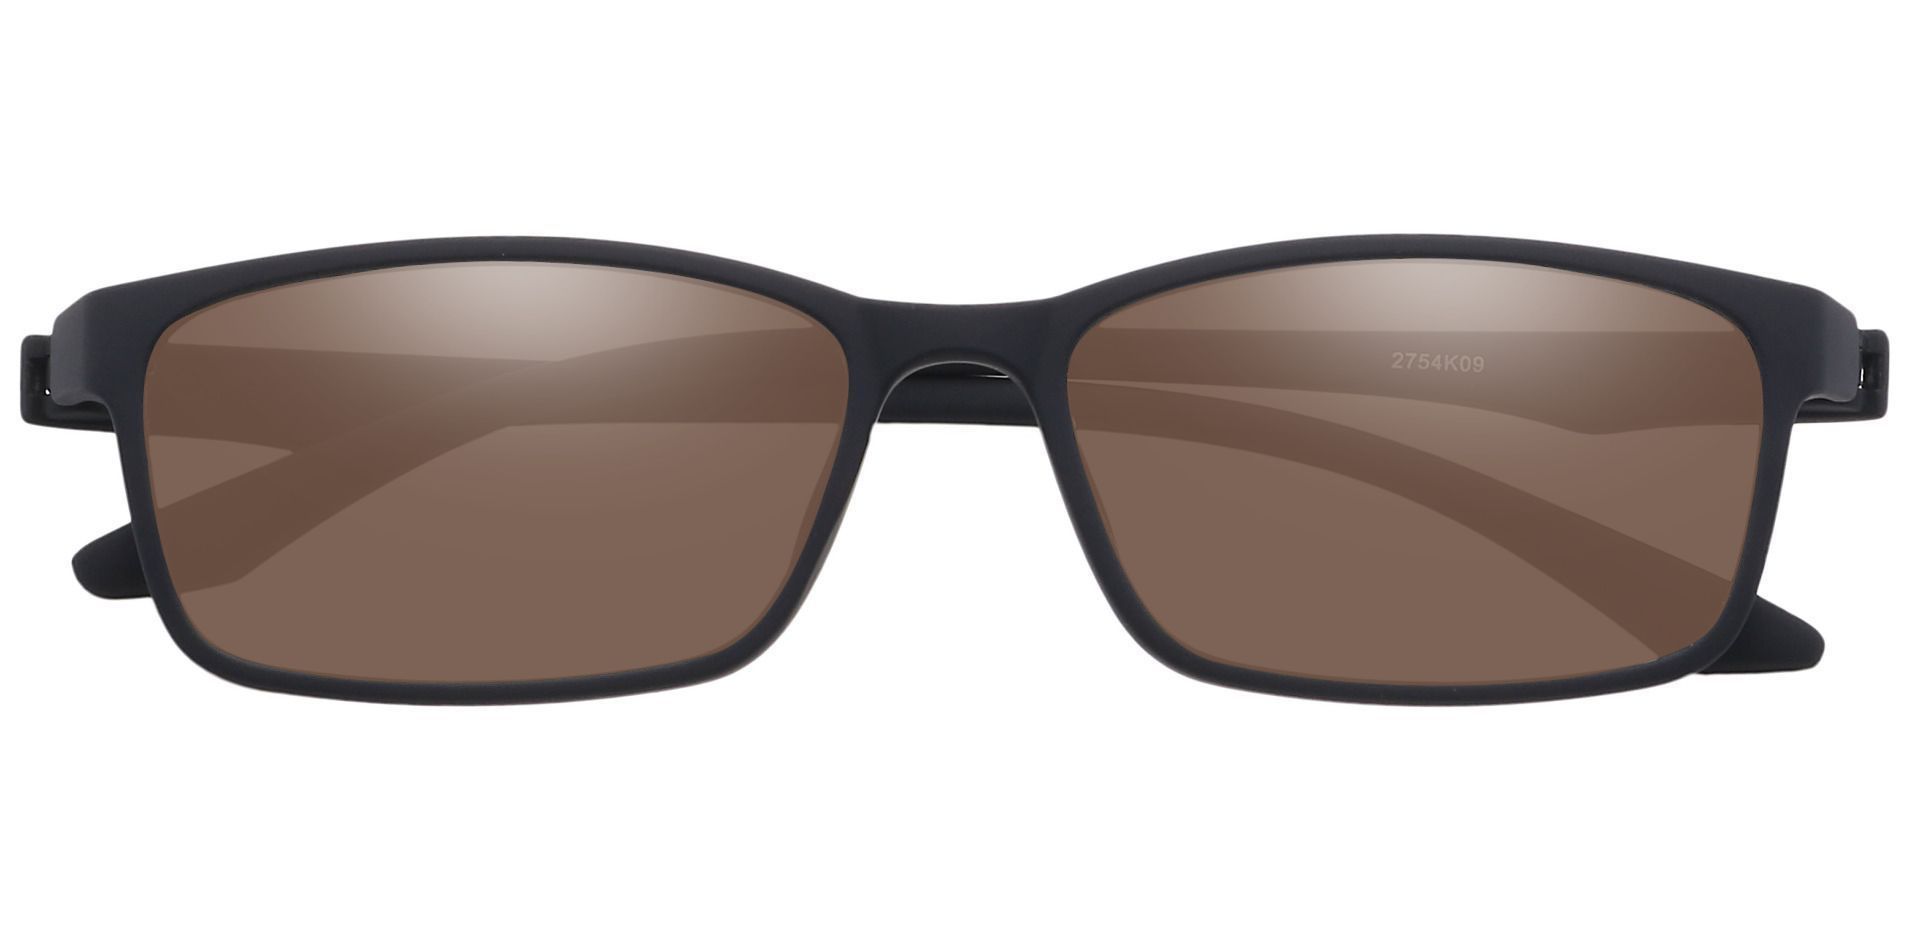 Wichita Rectangle Non-Rx Sunglasses -  Black Frame With Brown Lenses